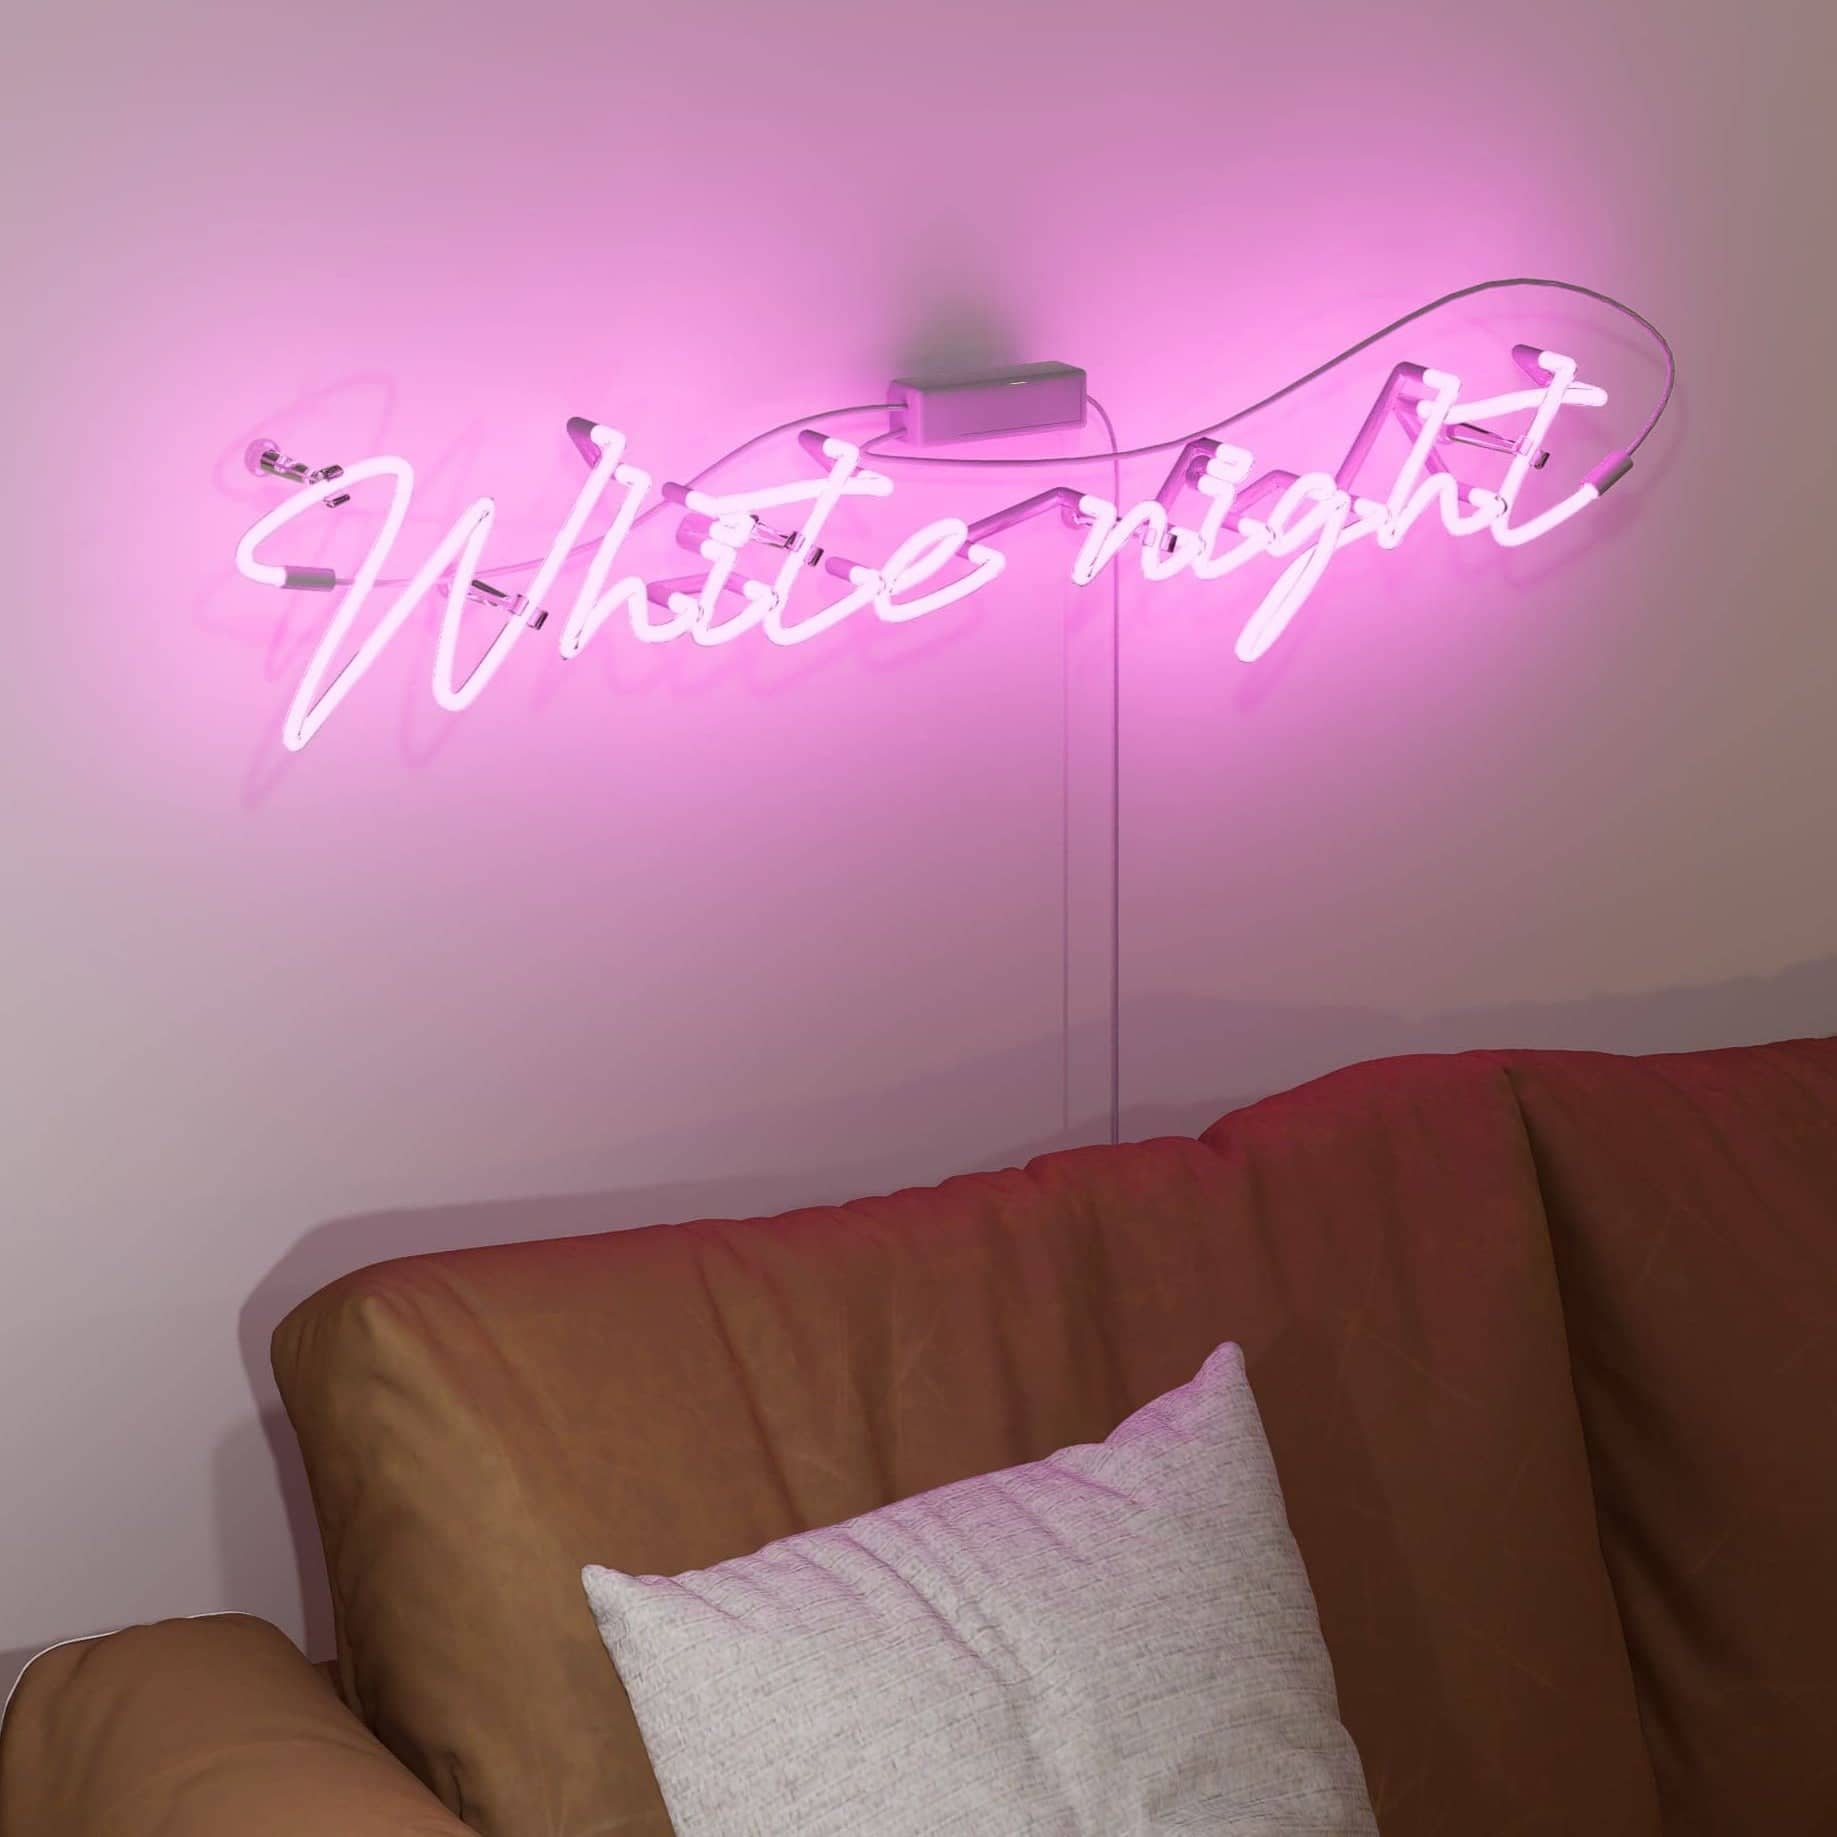 Vintage Neon Signs Illuminate the Serenity of White Night